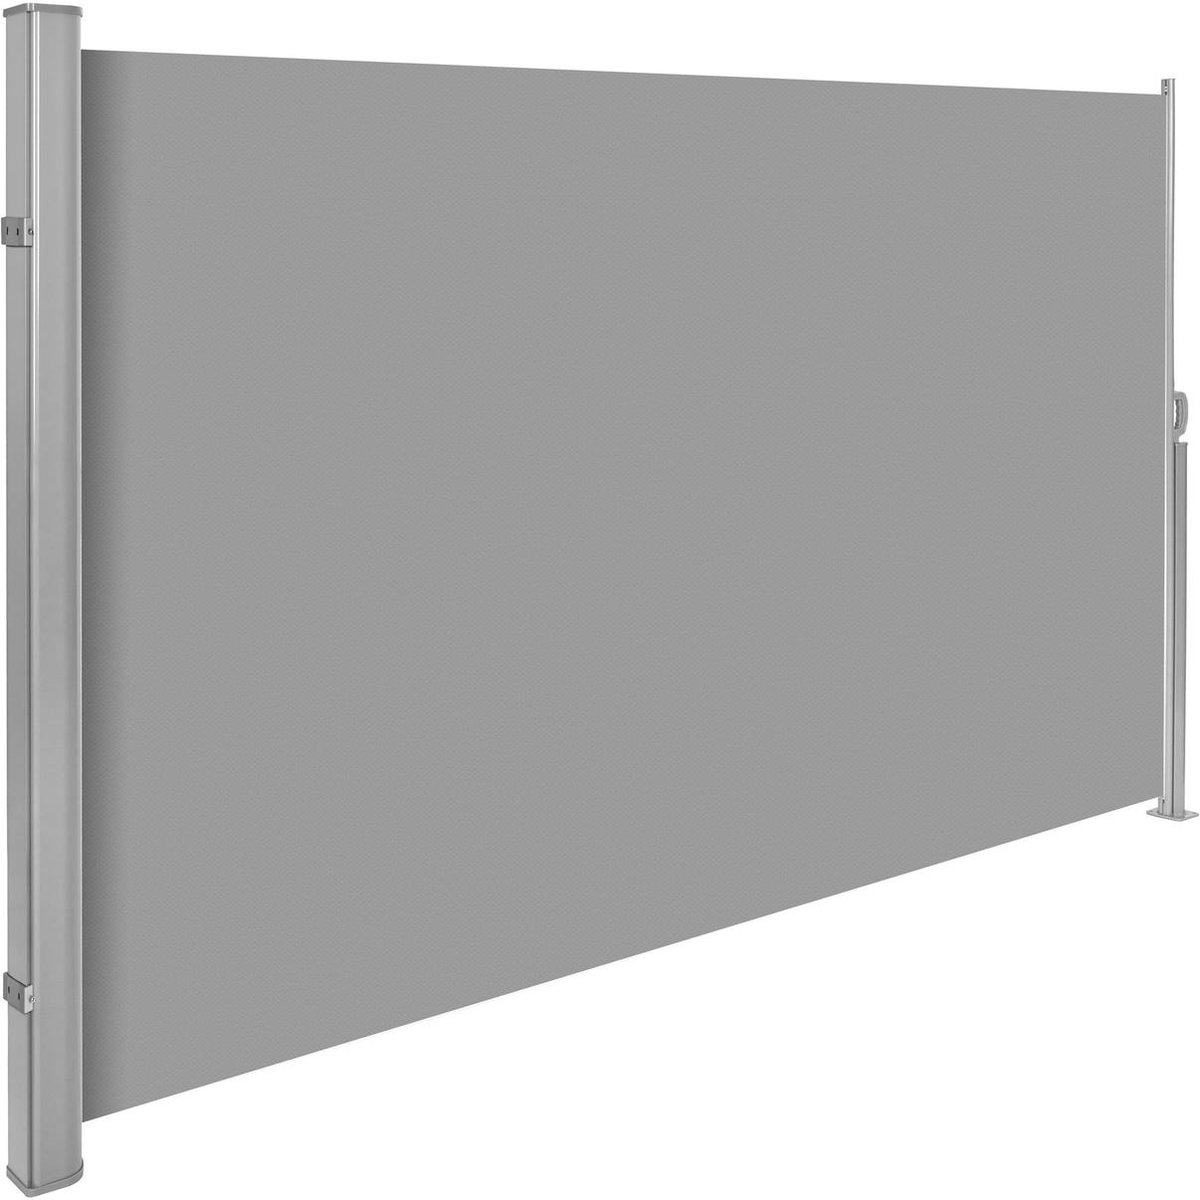 Uitschuifbaar aluminium windscherm tuinscherm 180 x 300 cm grijs 401527 |  bol.com